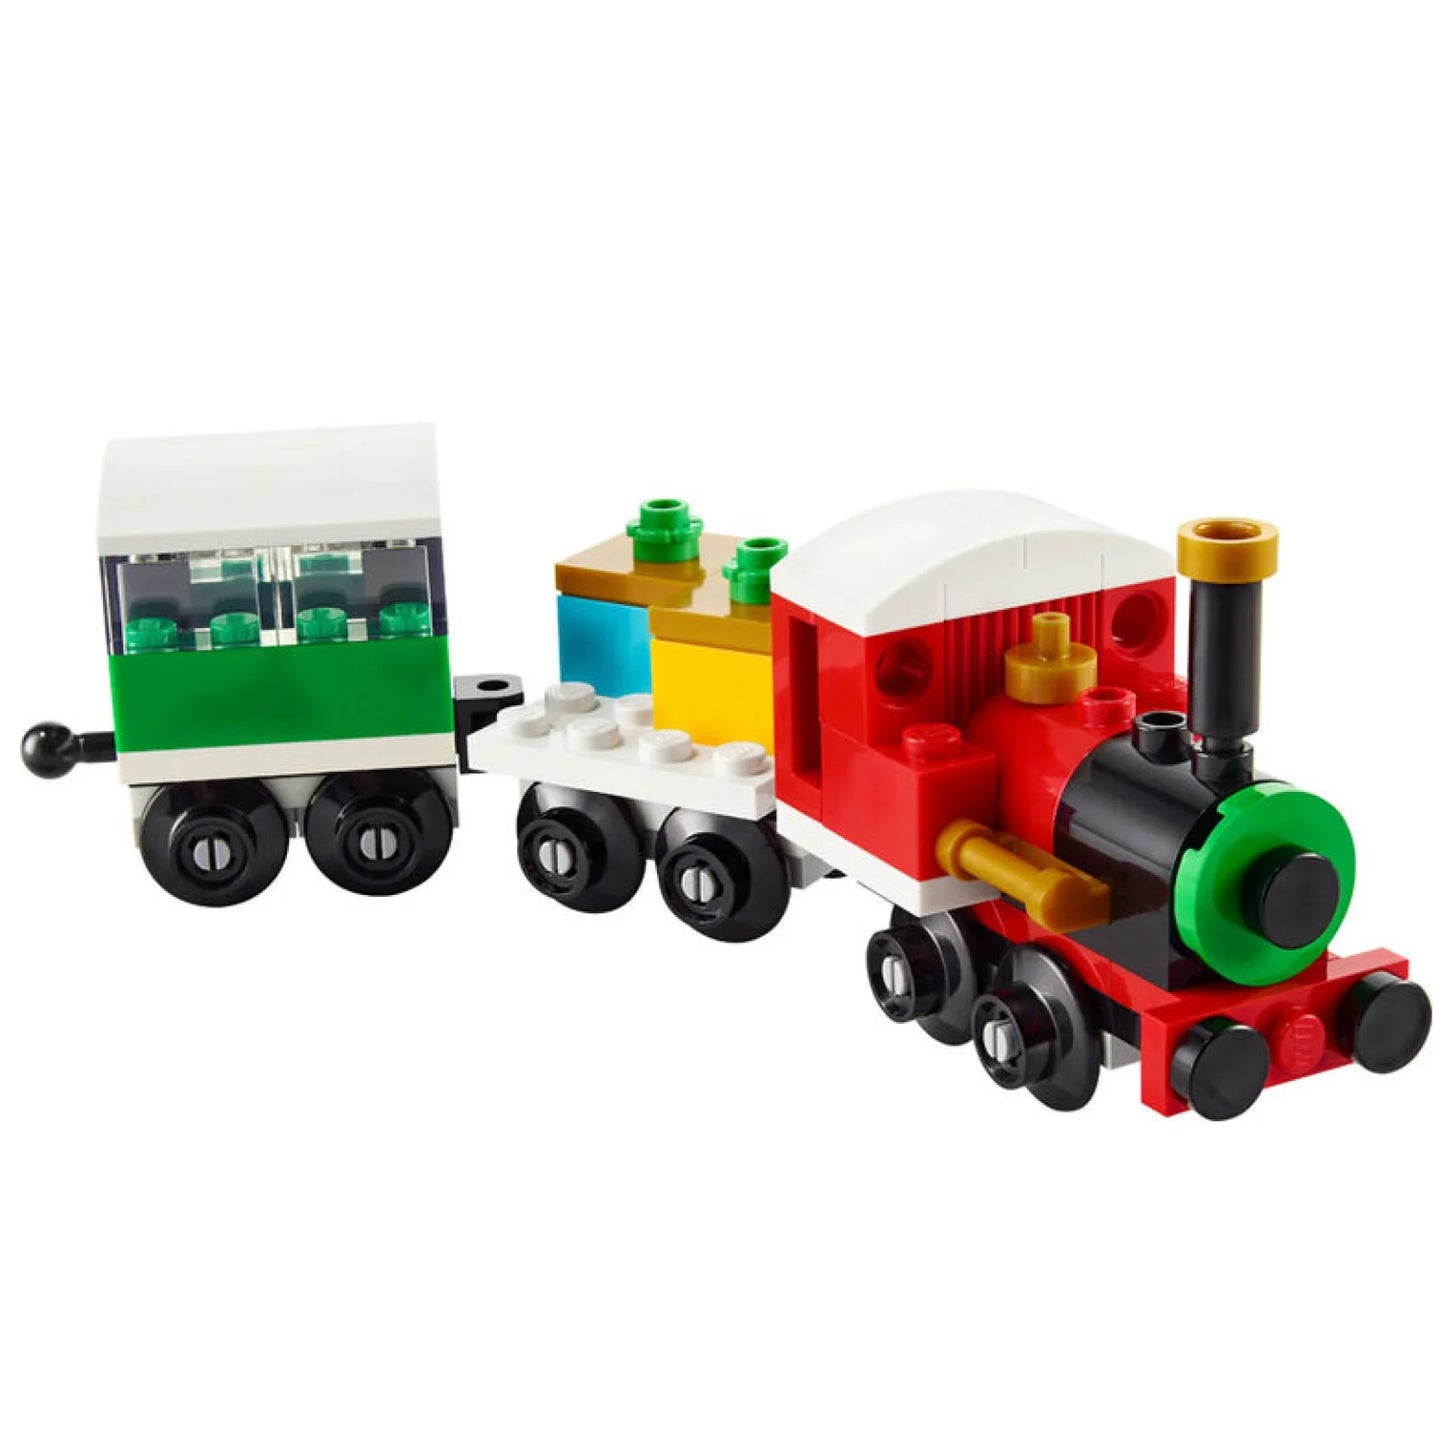 Lego Creator Winter Holiday Train 30584 Polybag